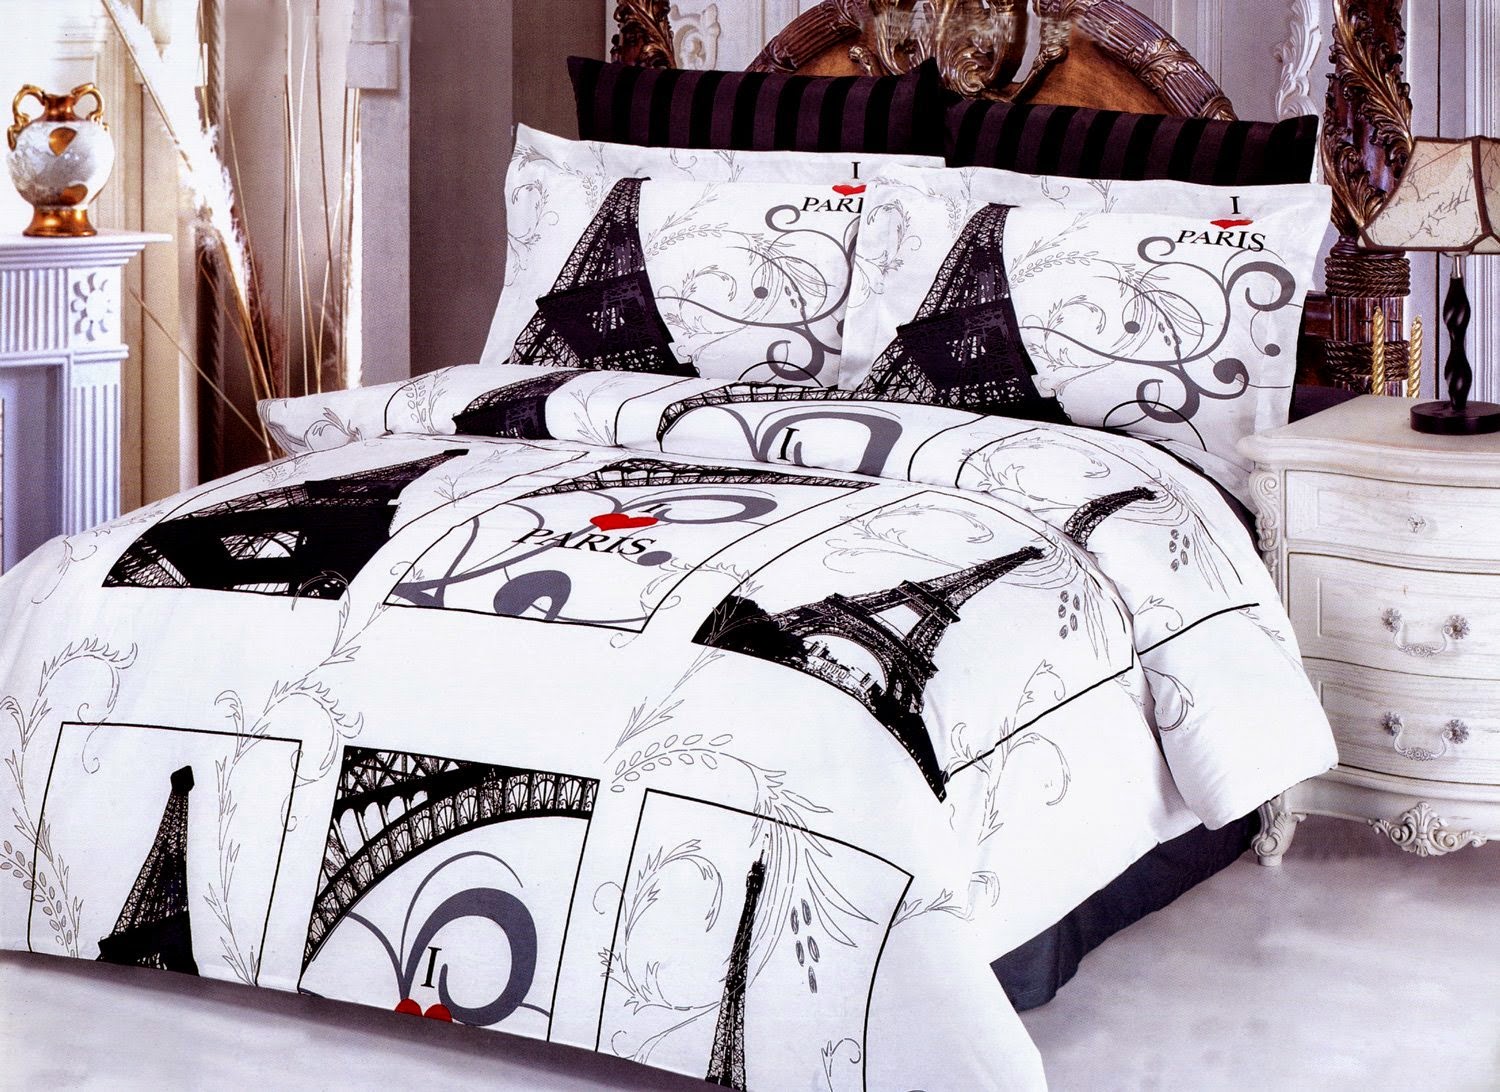 Bedroom Decor Ideas and Designs: Top Ten Paris Themed